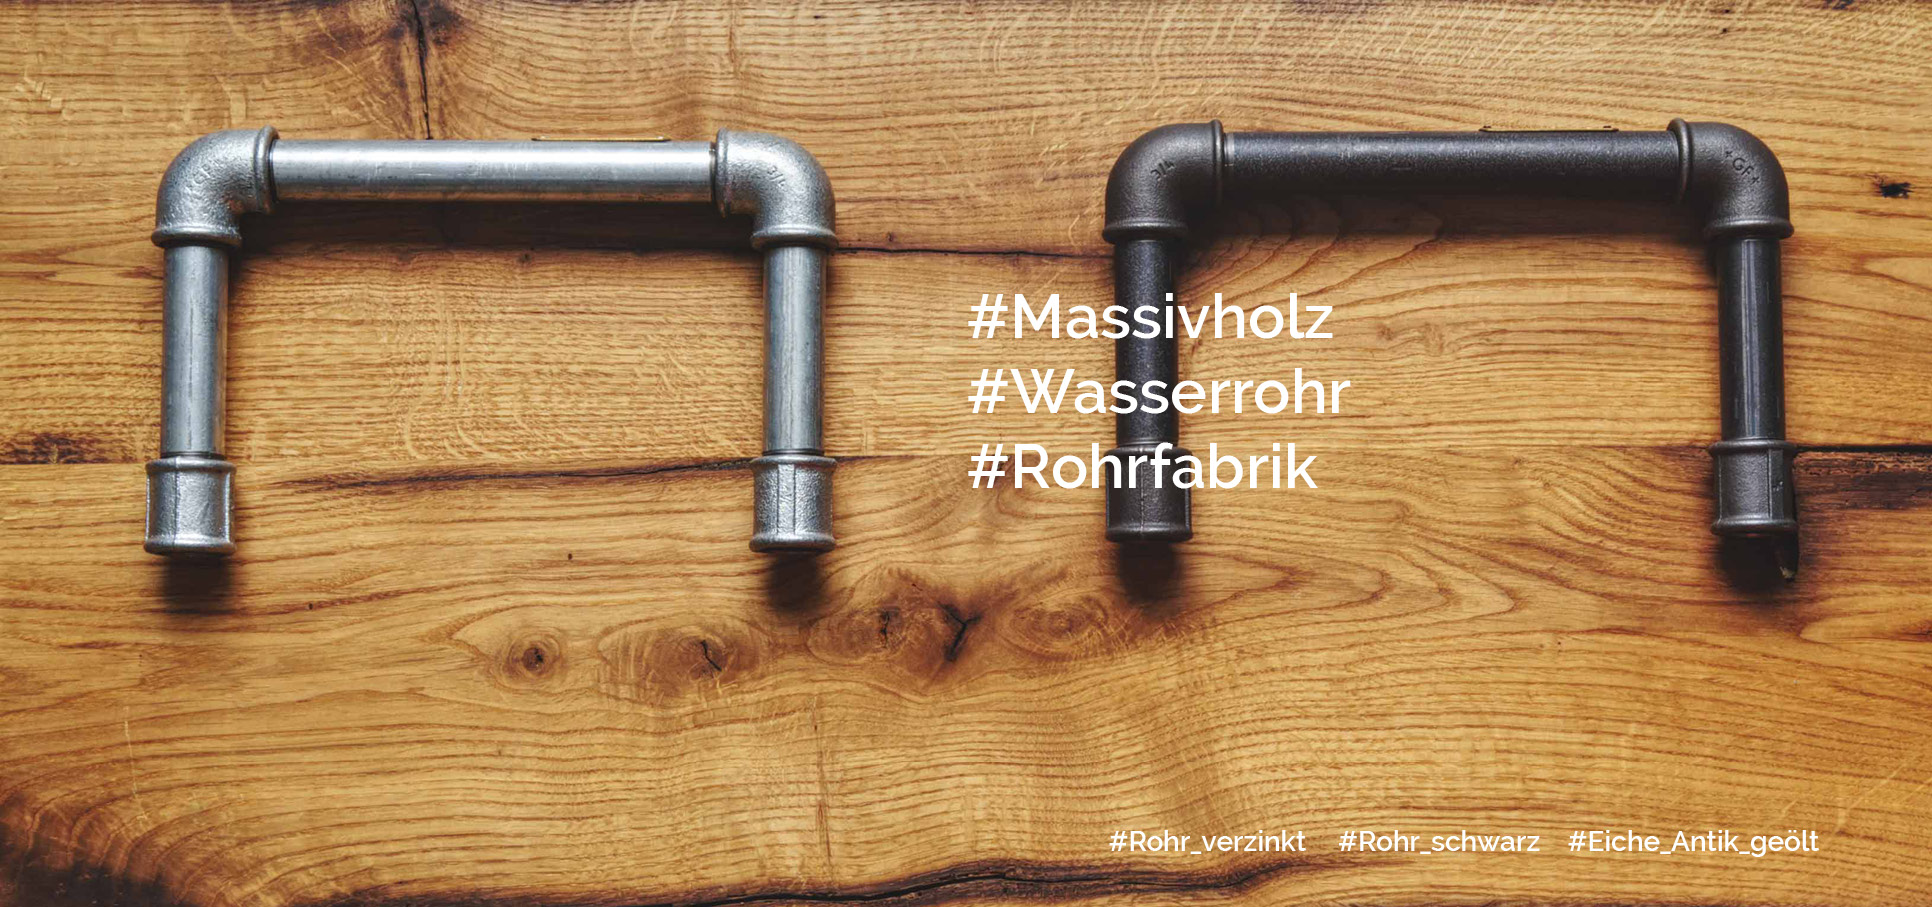 rohrfabrik-massivholz-tablar-eiche-alt-geoelt-antik-design-metall-wasserrohr-garderobe4.jpg